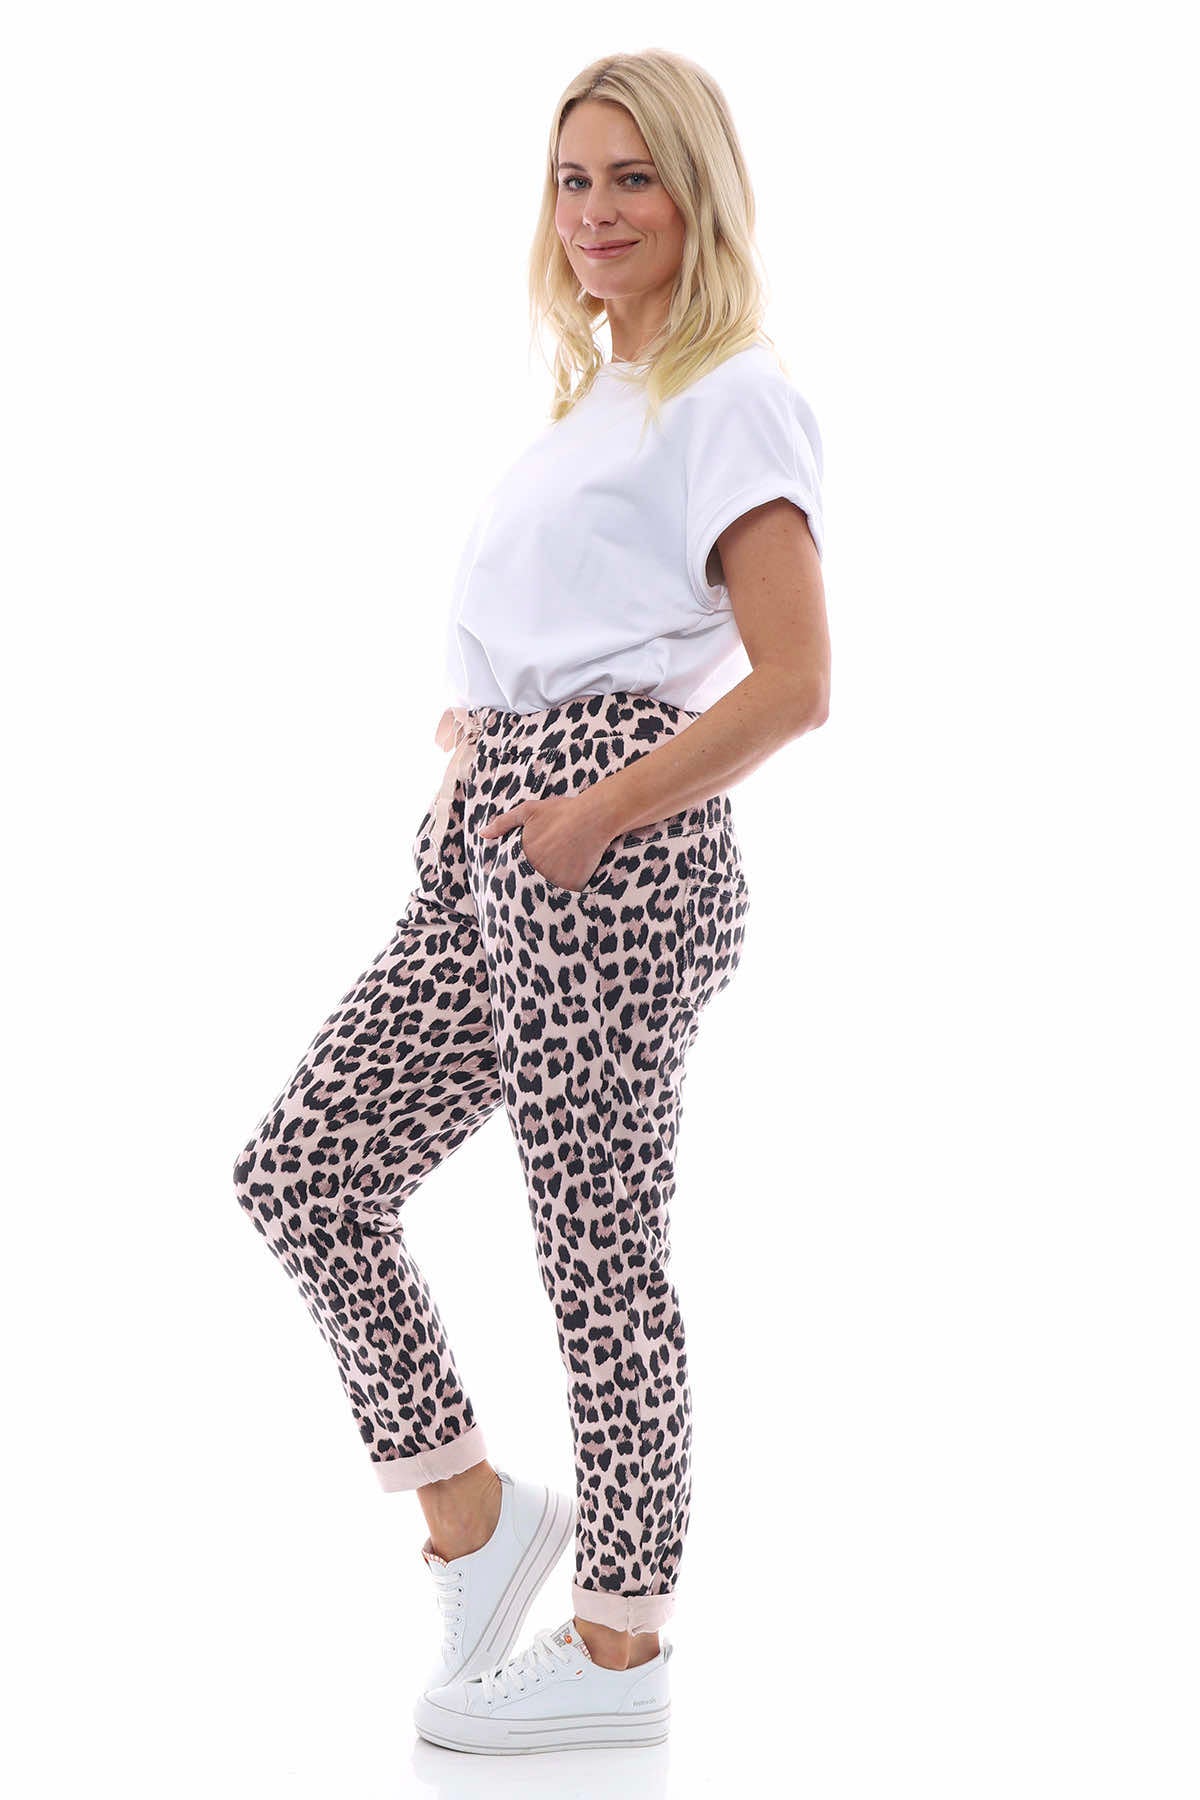 Minskip Leopard Print Jersey Pants Pink